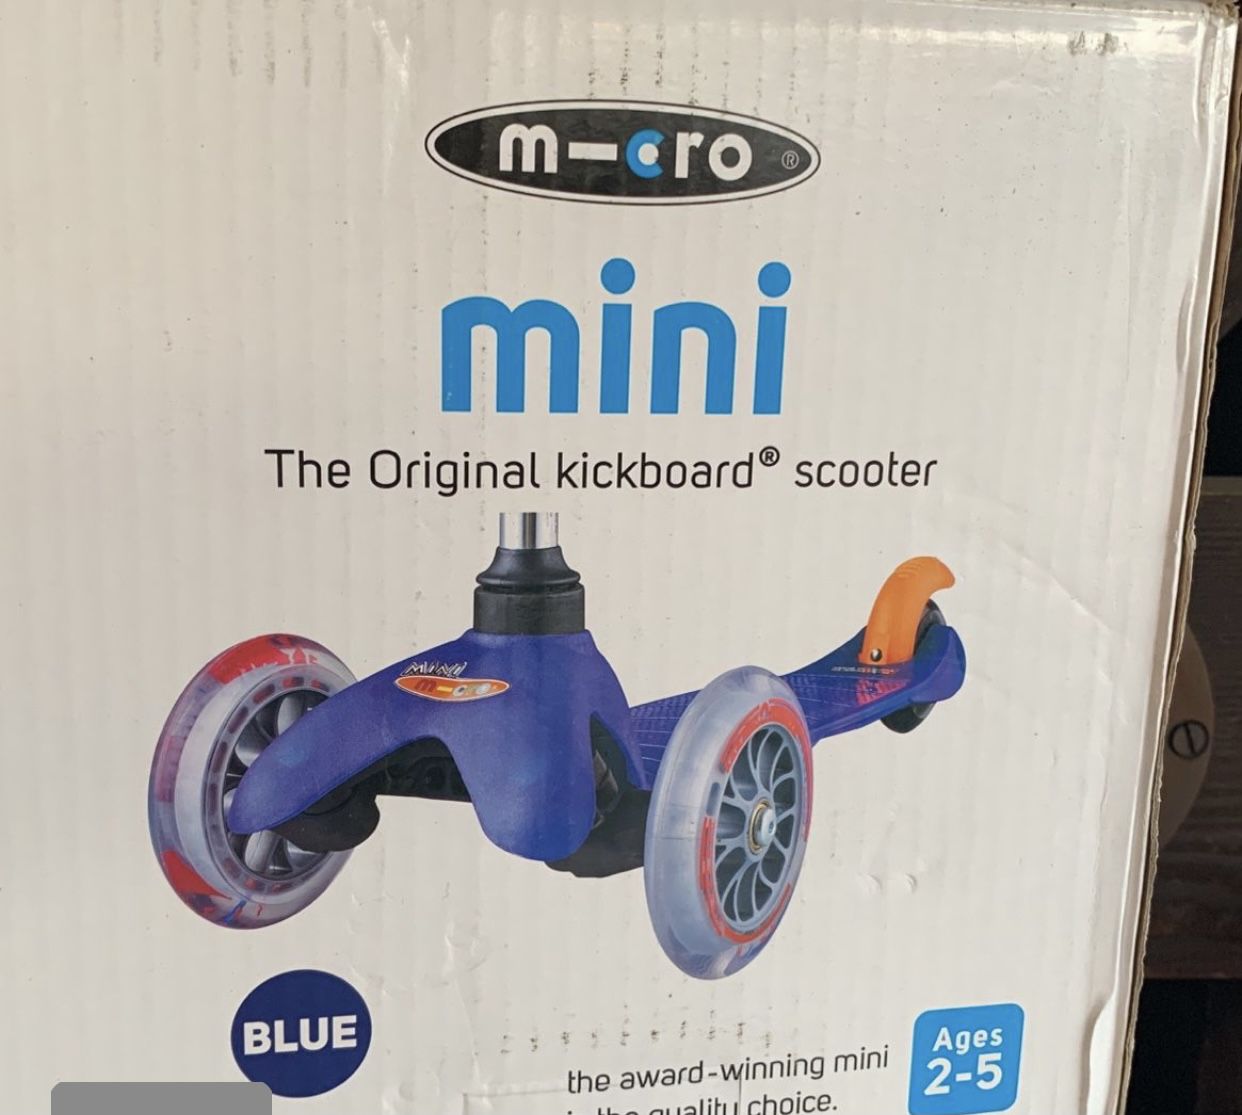 Micro Mini The Original Kickboard Scooter Blue (Ages 2-5)